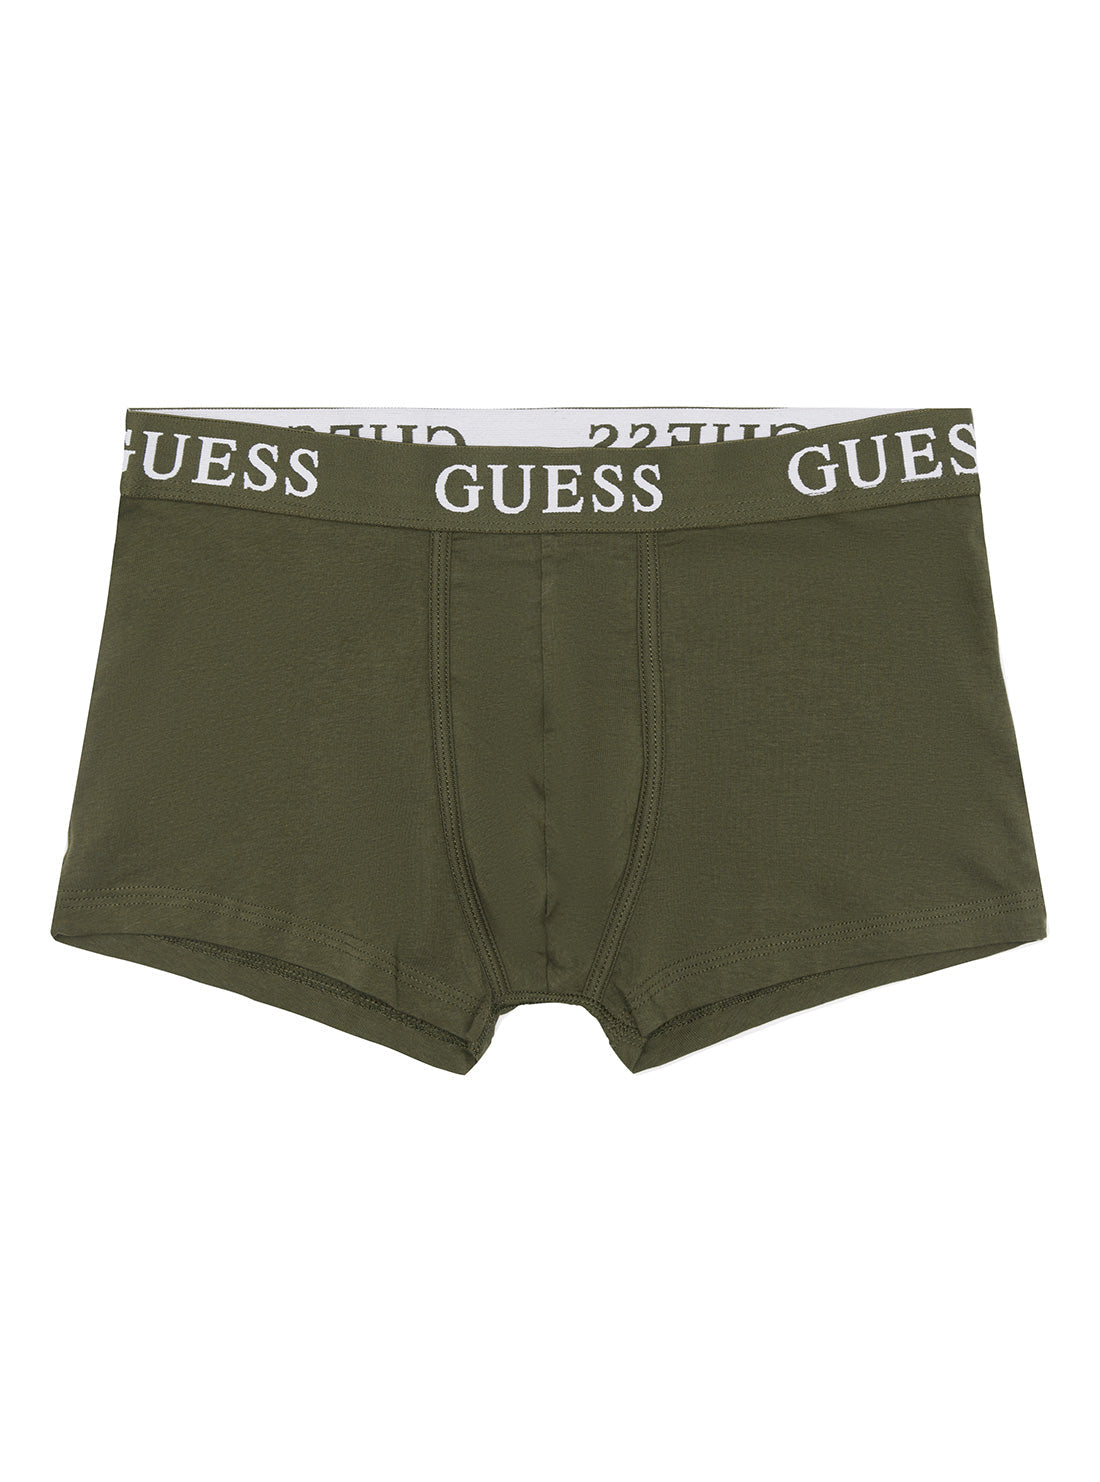 GUESS Mens Eco Aqua Green Amalfi Joe Boxer Trunk 3-Pack Set U2RG00K6YW1 Green View